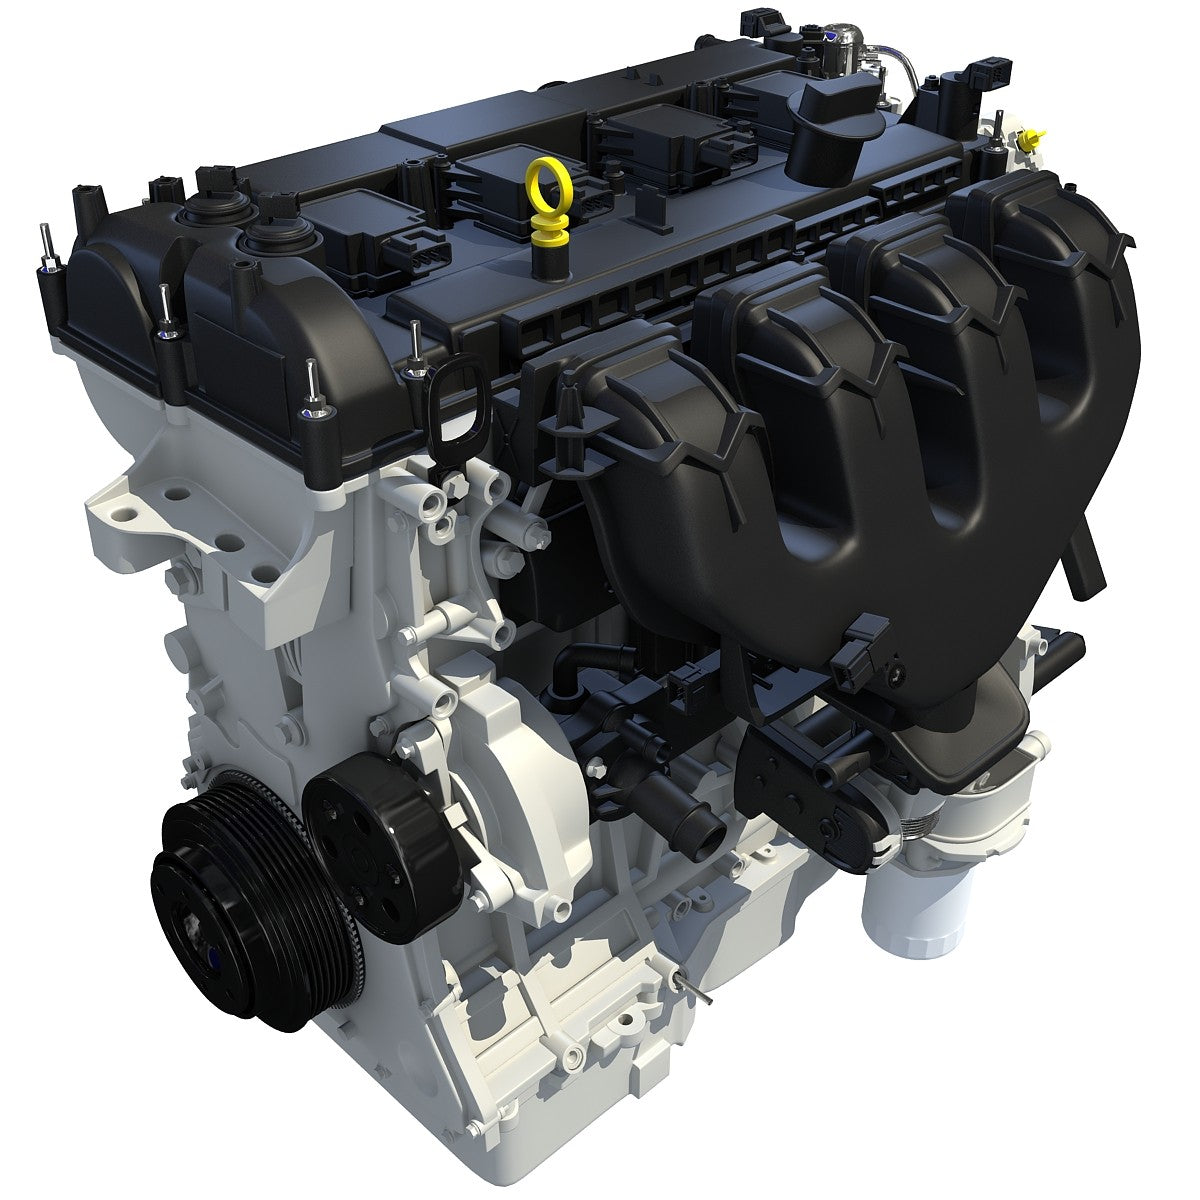 3D Turbo Engine Model